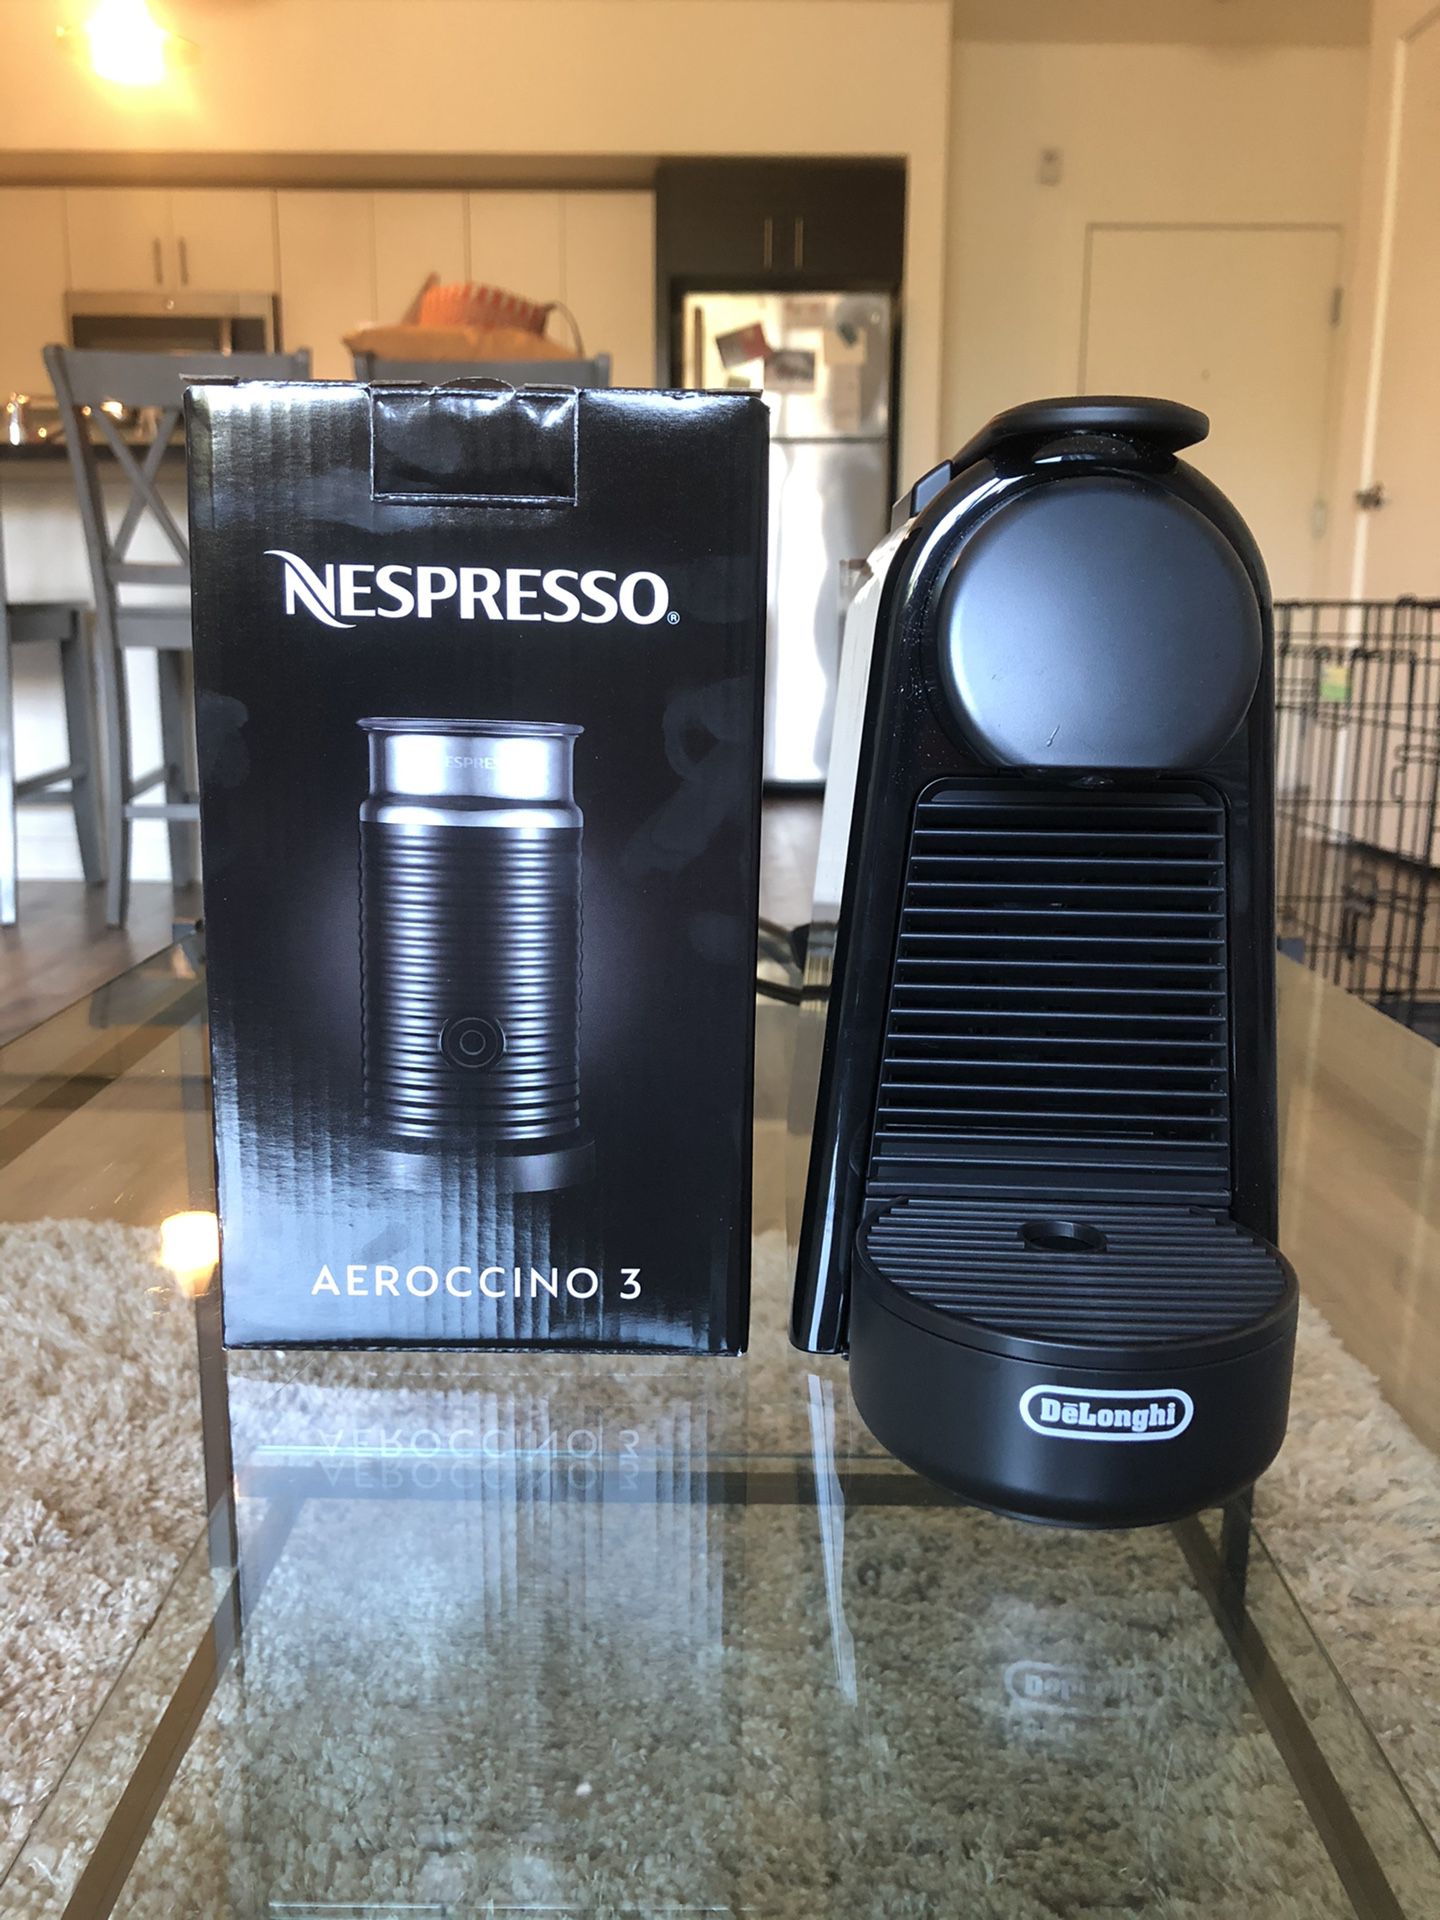 Nespresso Espresso Maker and Milk Frother